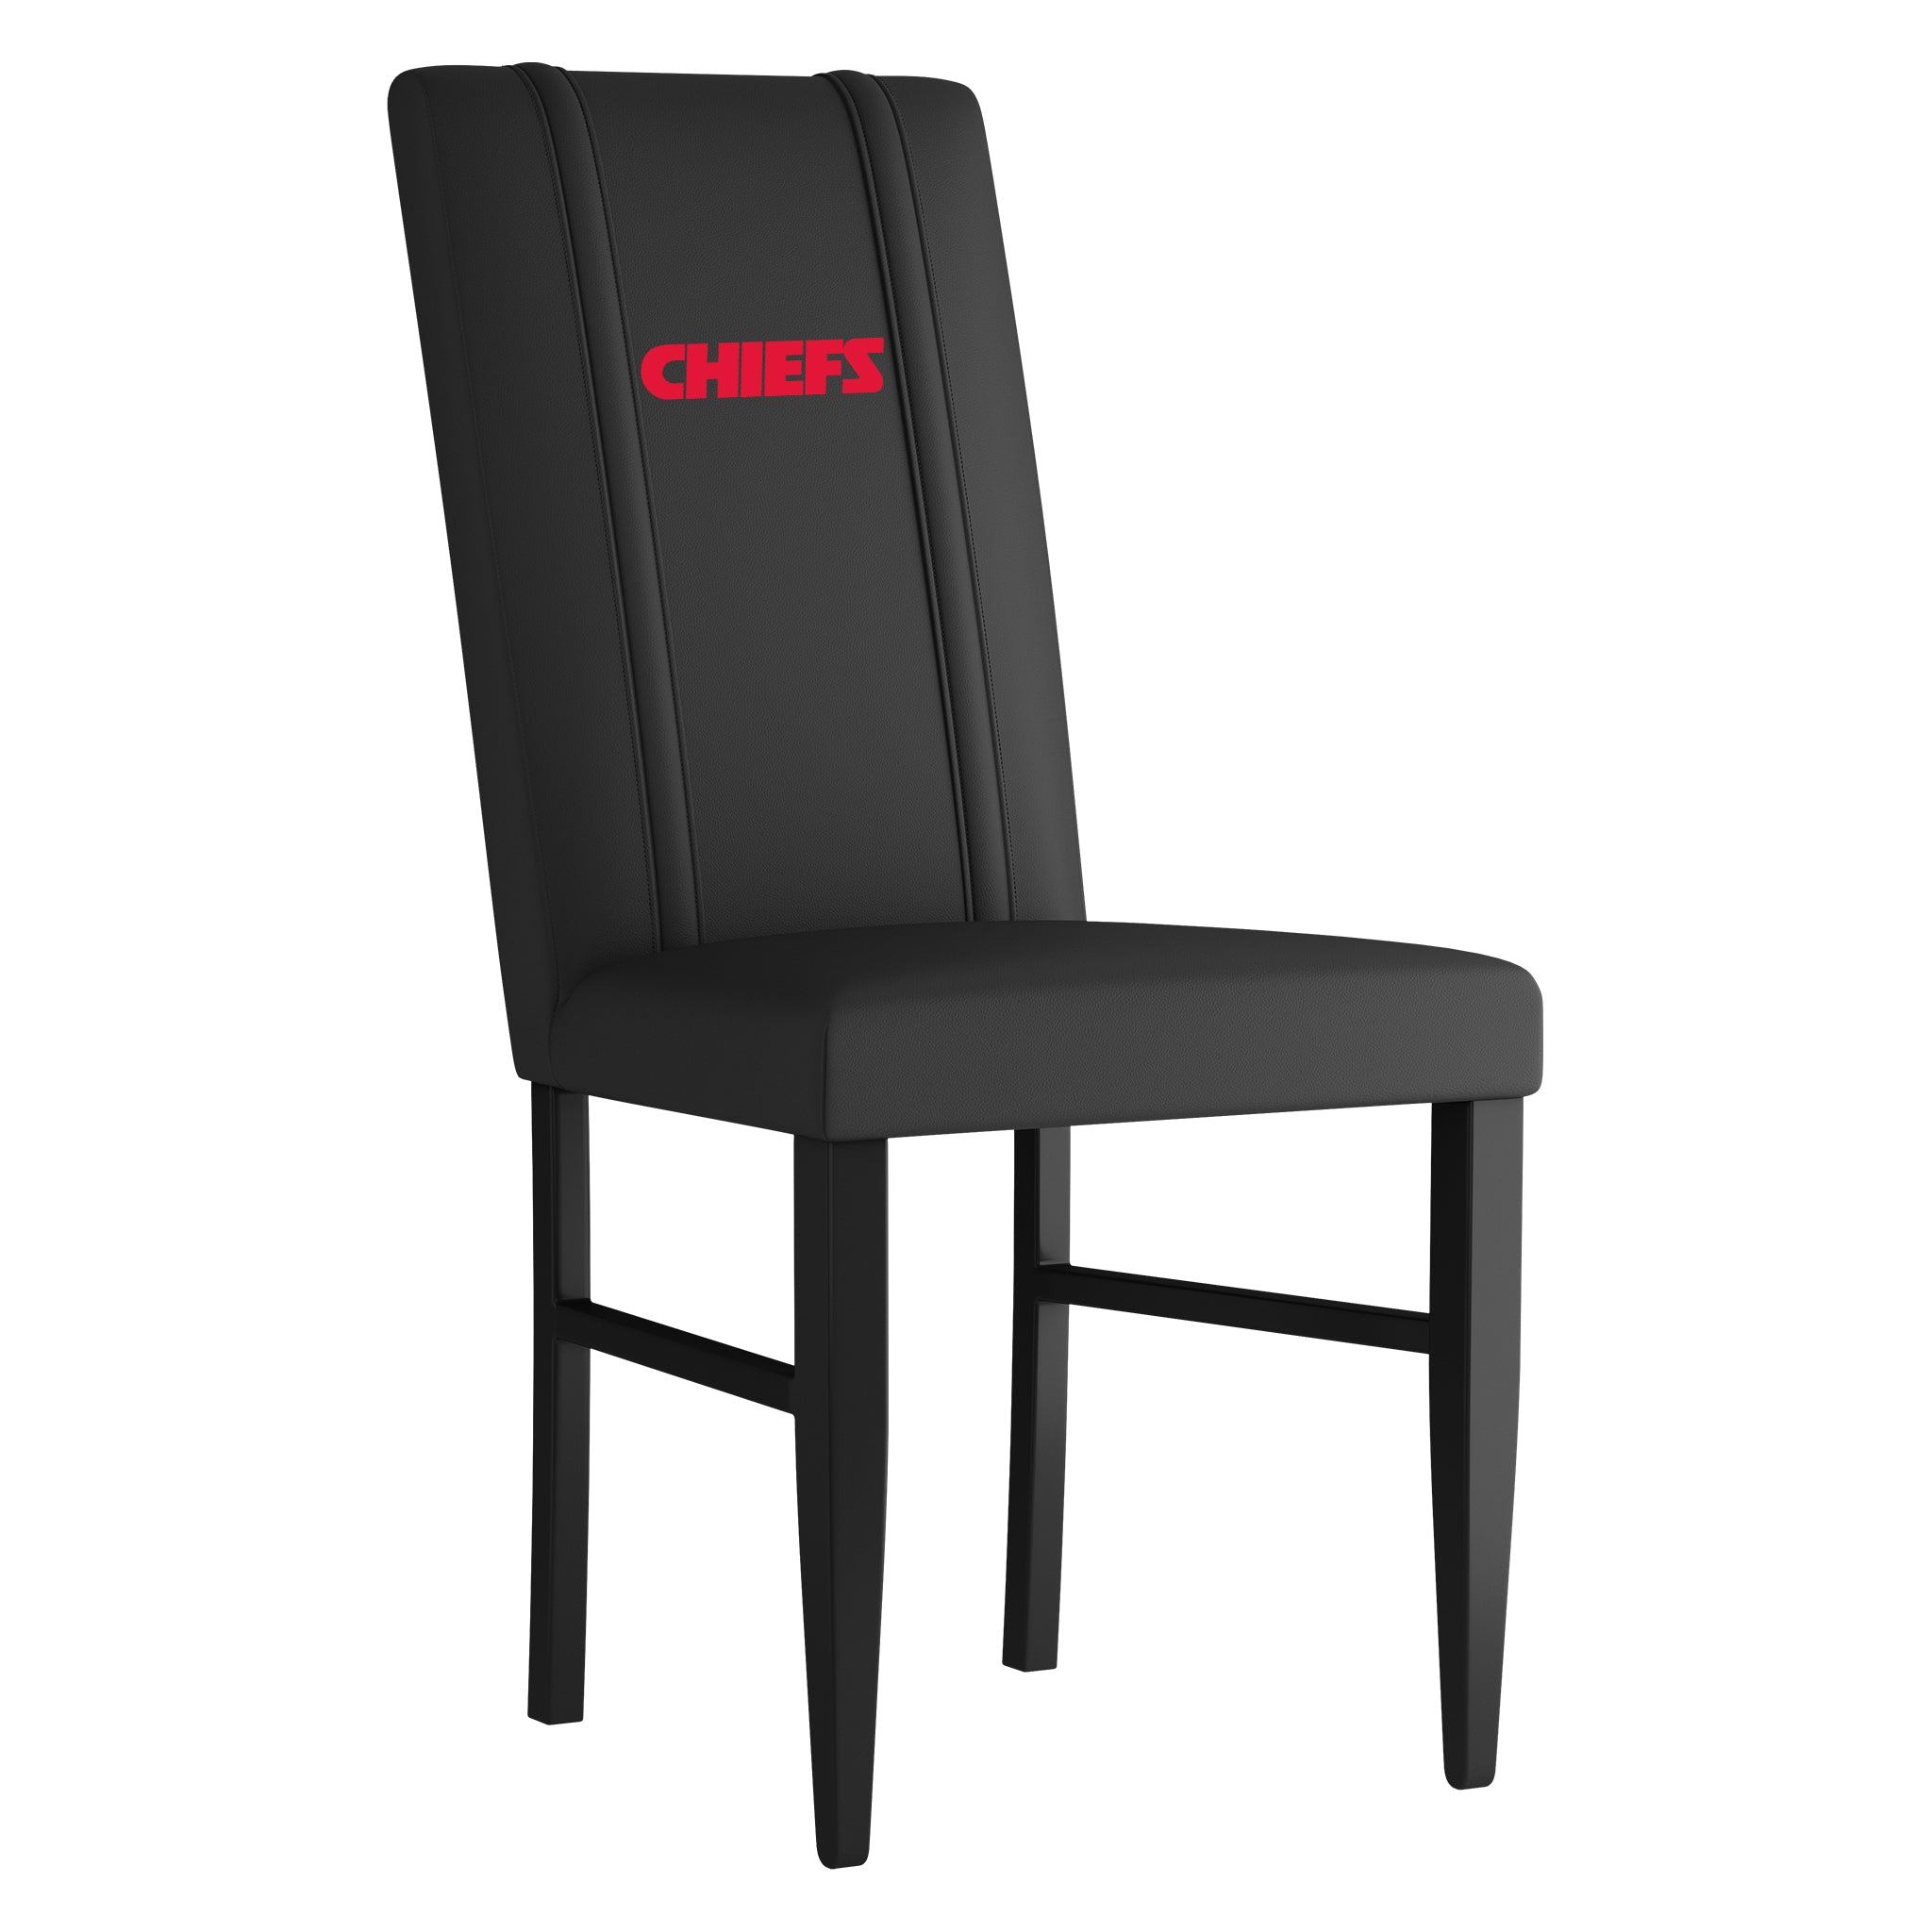 Kansas City Chiefs Side Chair 2000